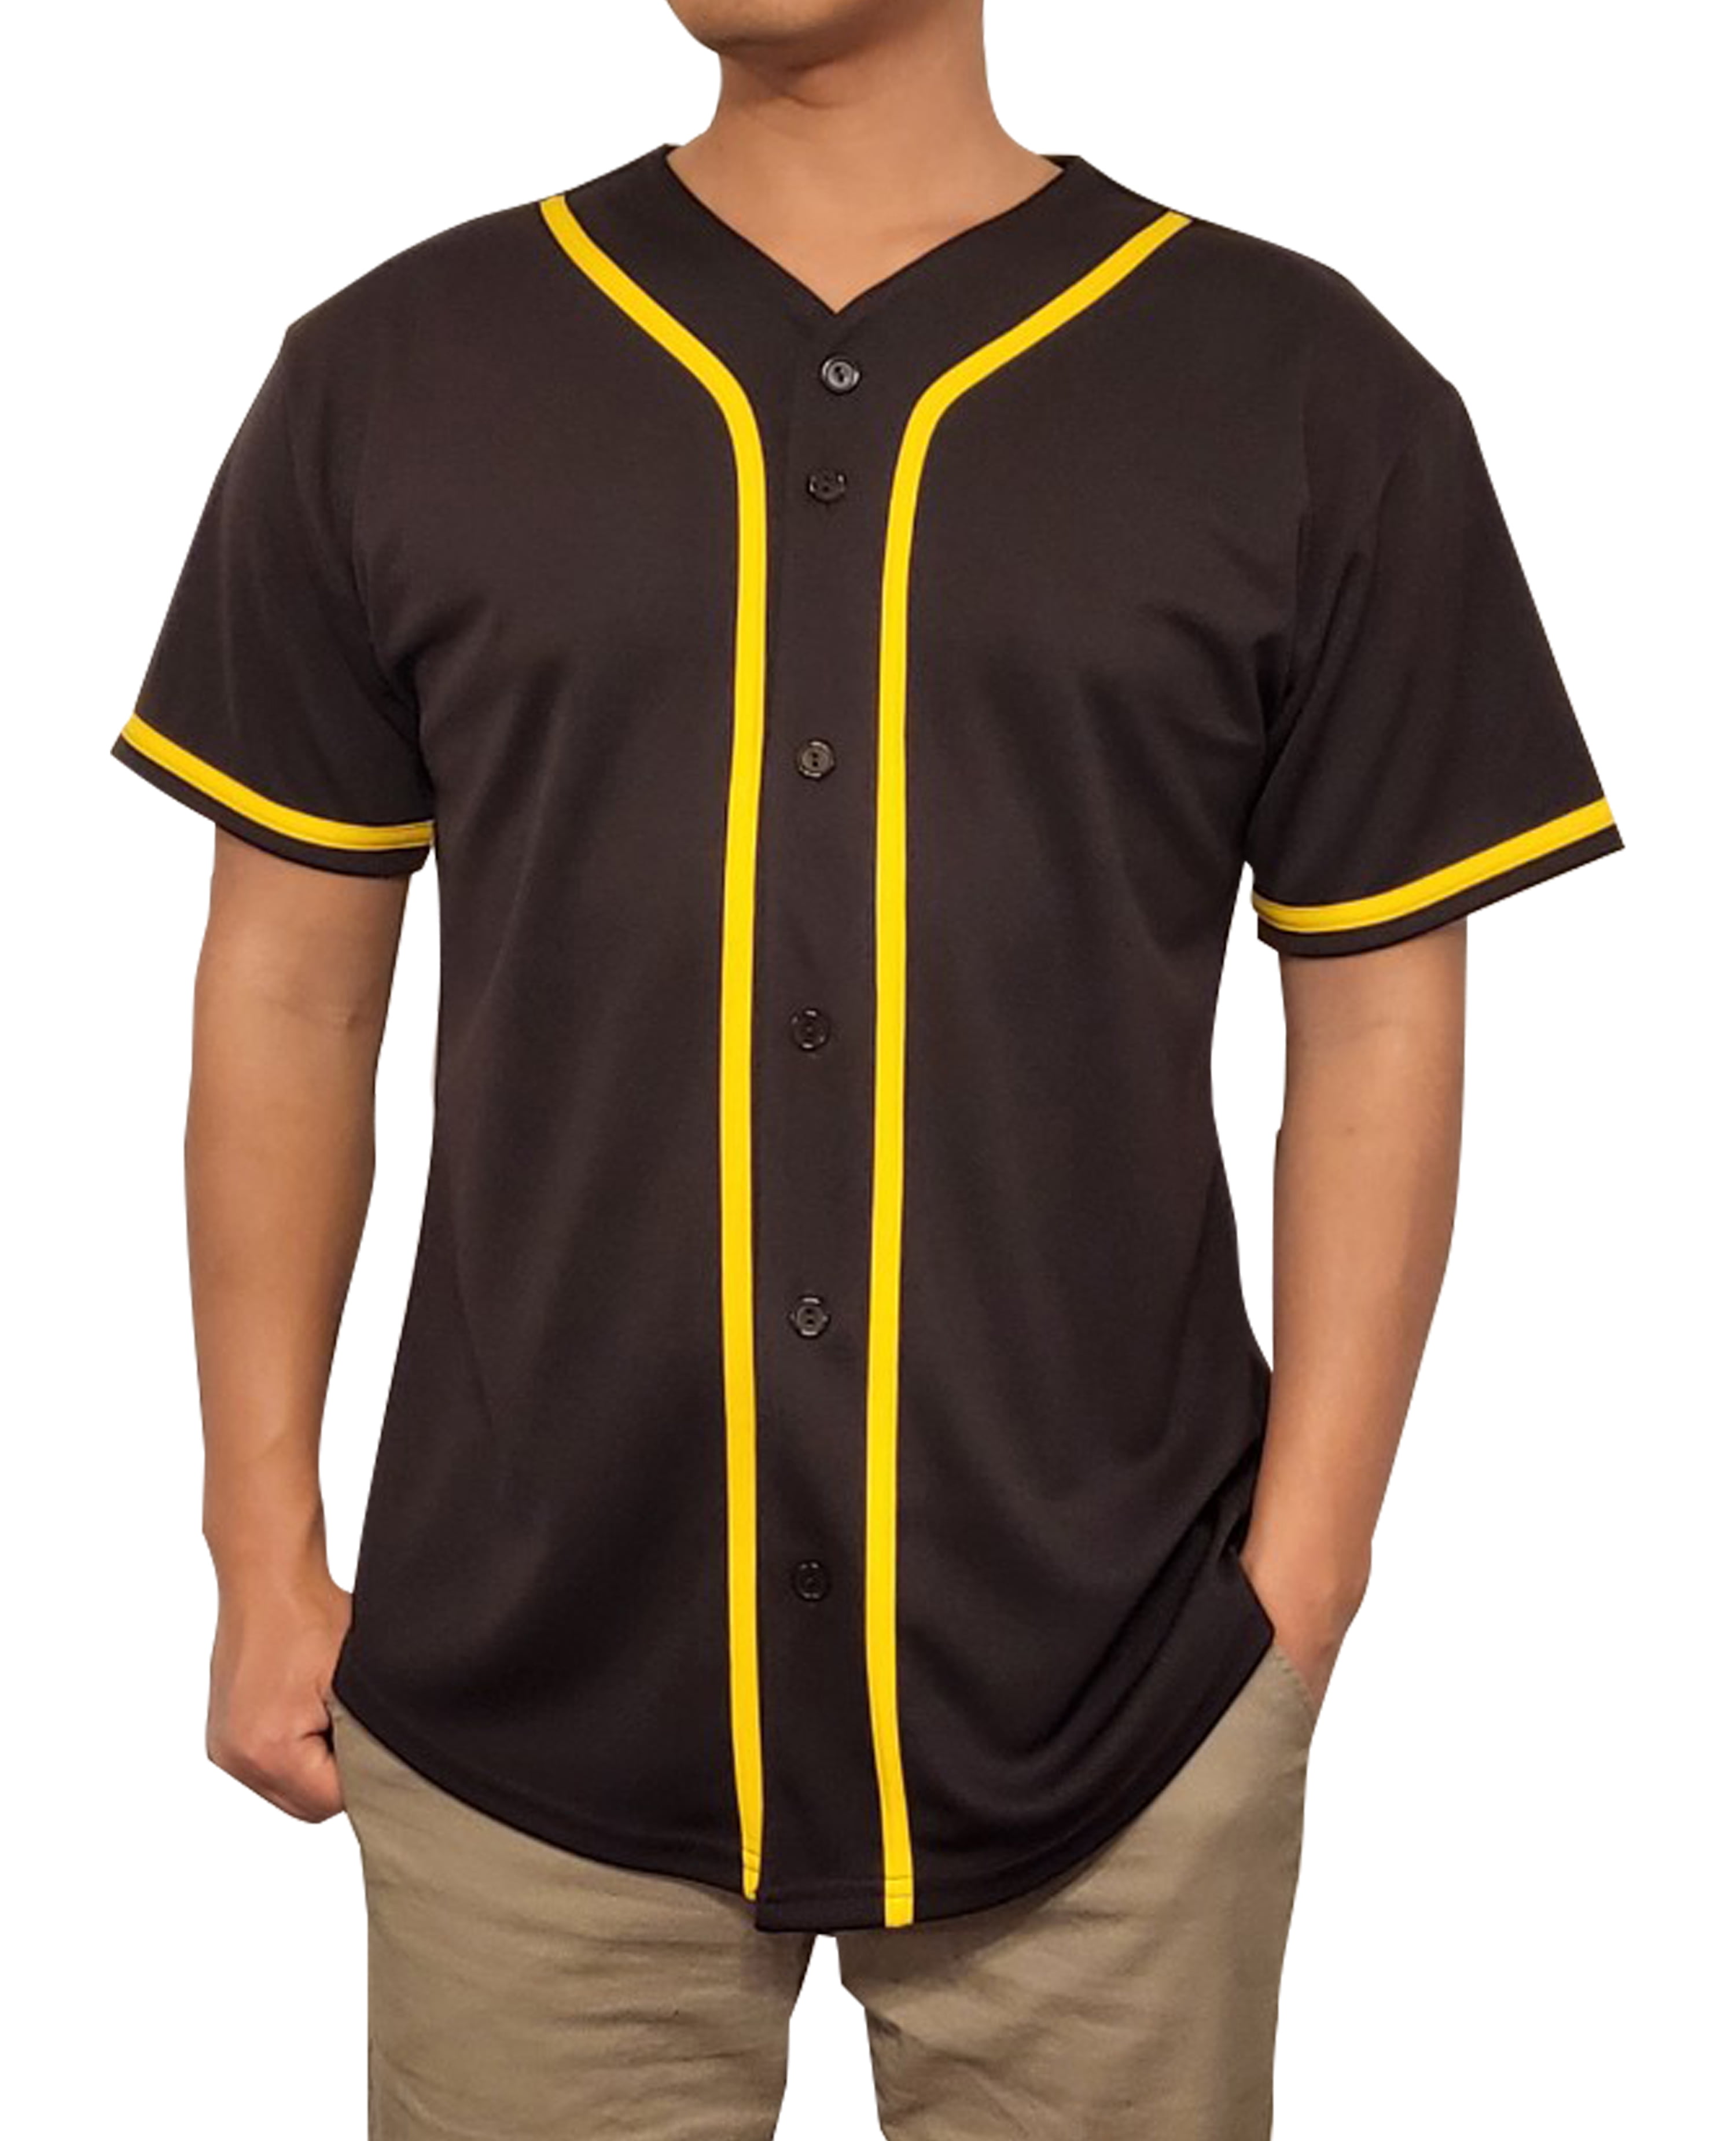 Lappel Men's Baseball Button Down Jersey College Sports Team Uniforms ...